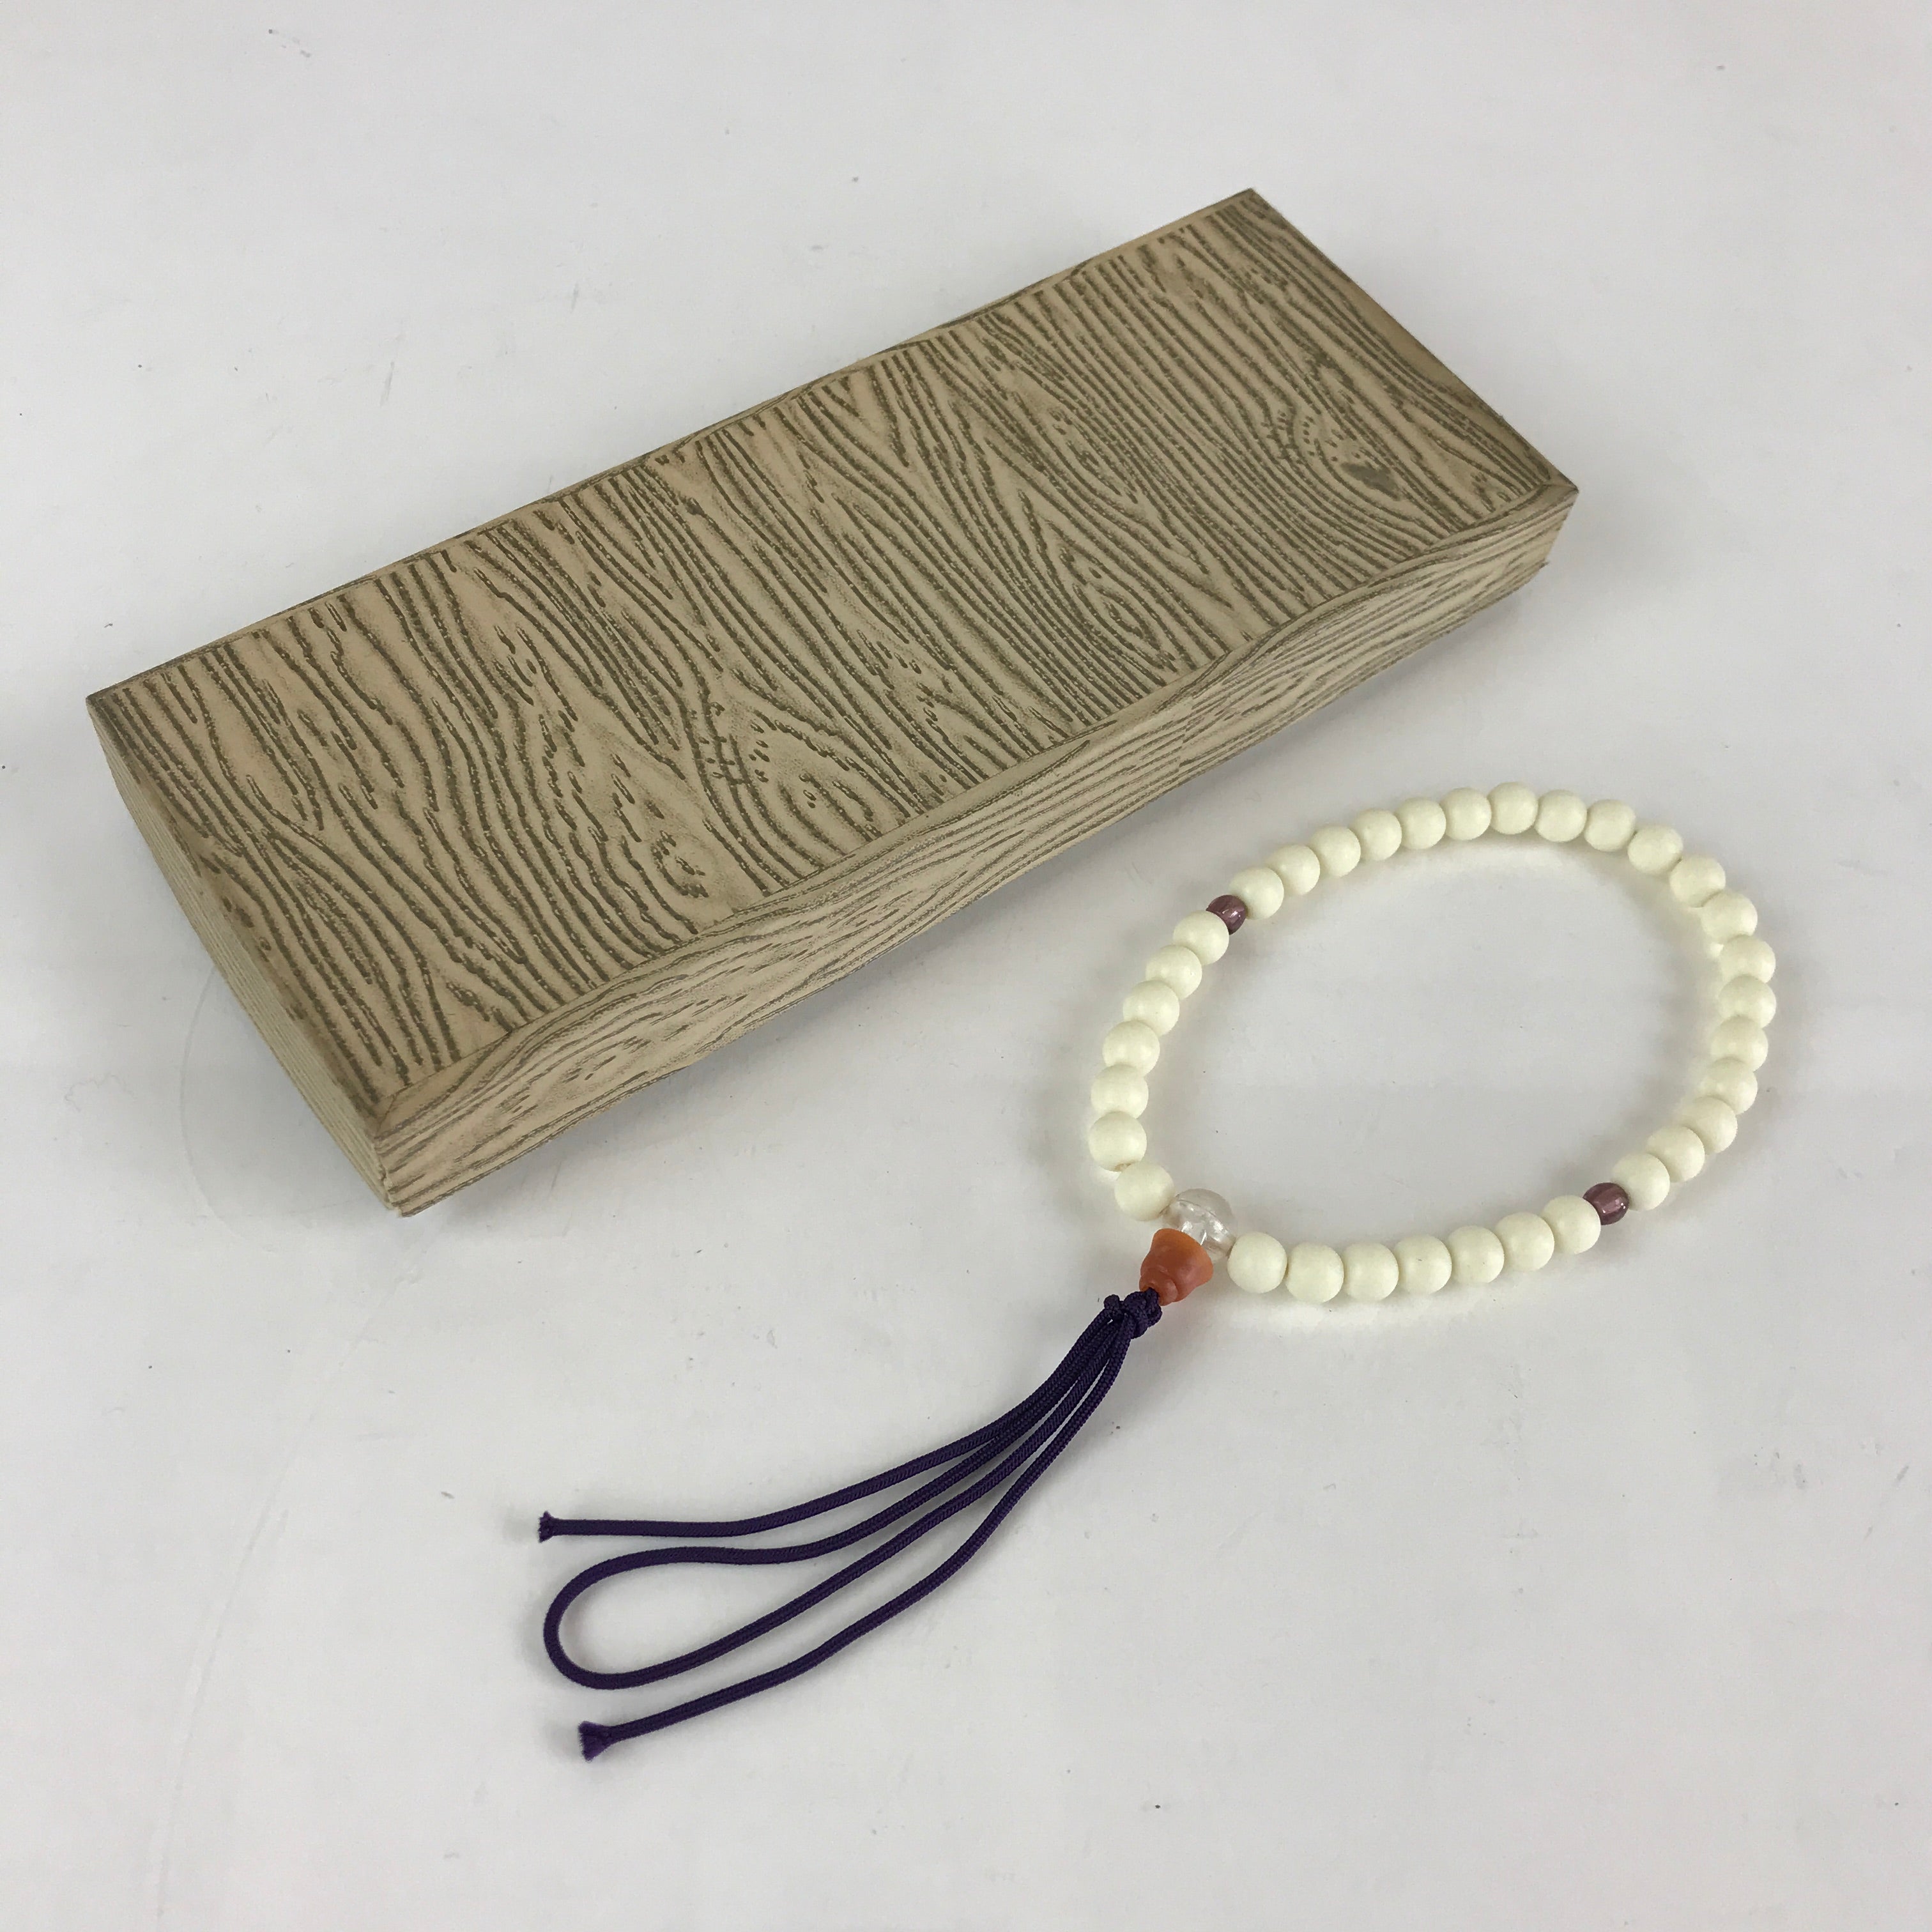 File:Buddhist prayer beads for sale.jpg - Wikipedia